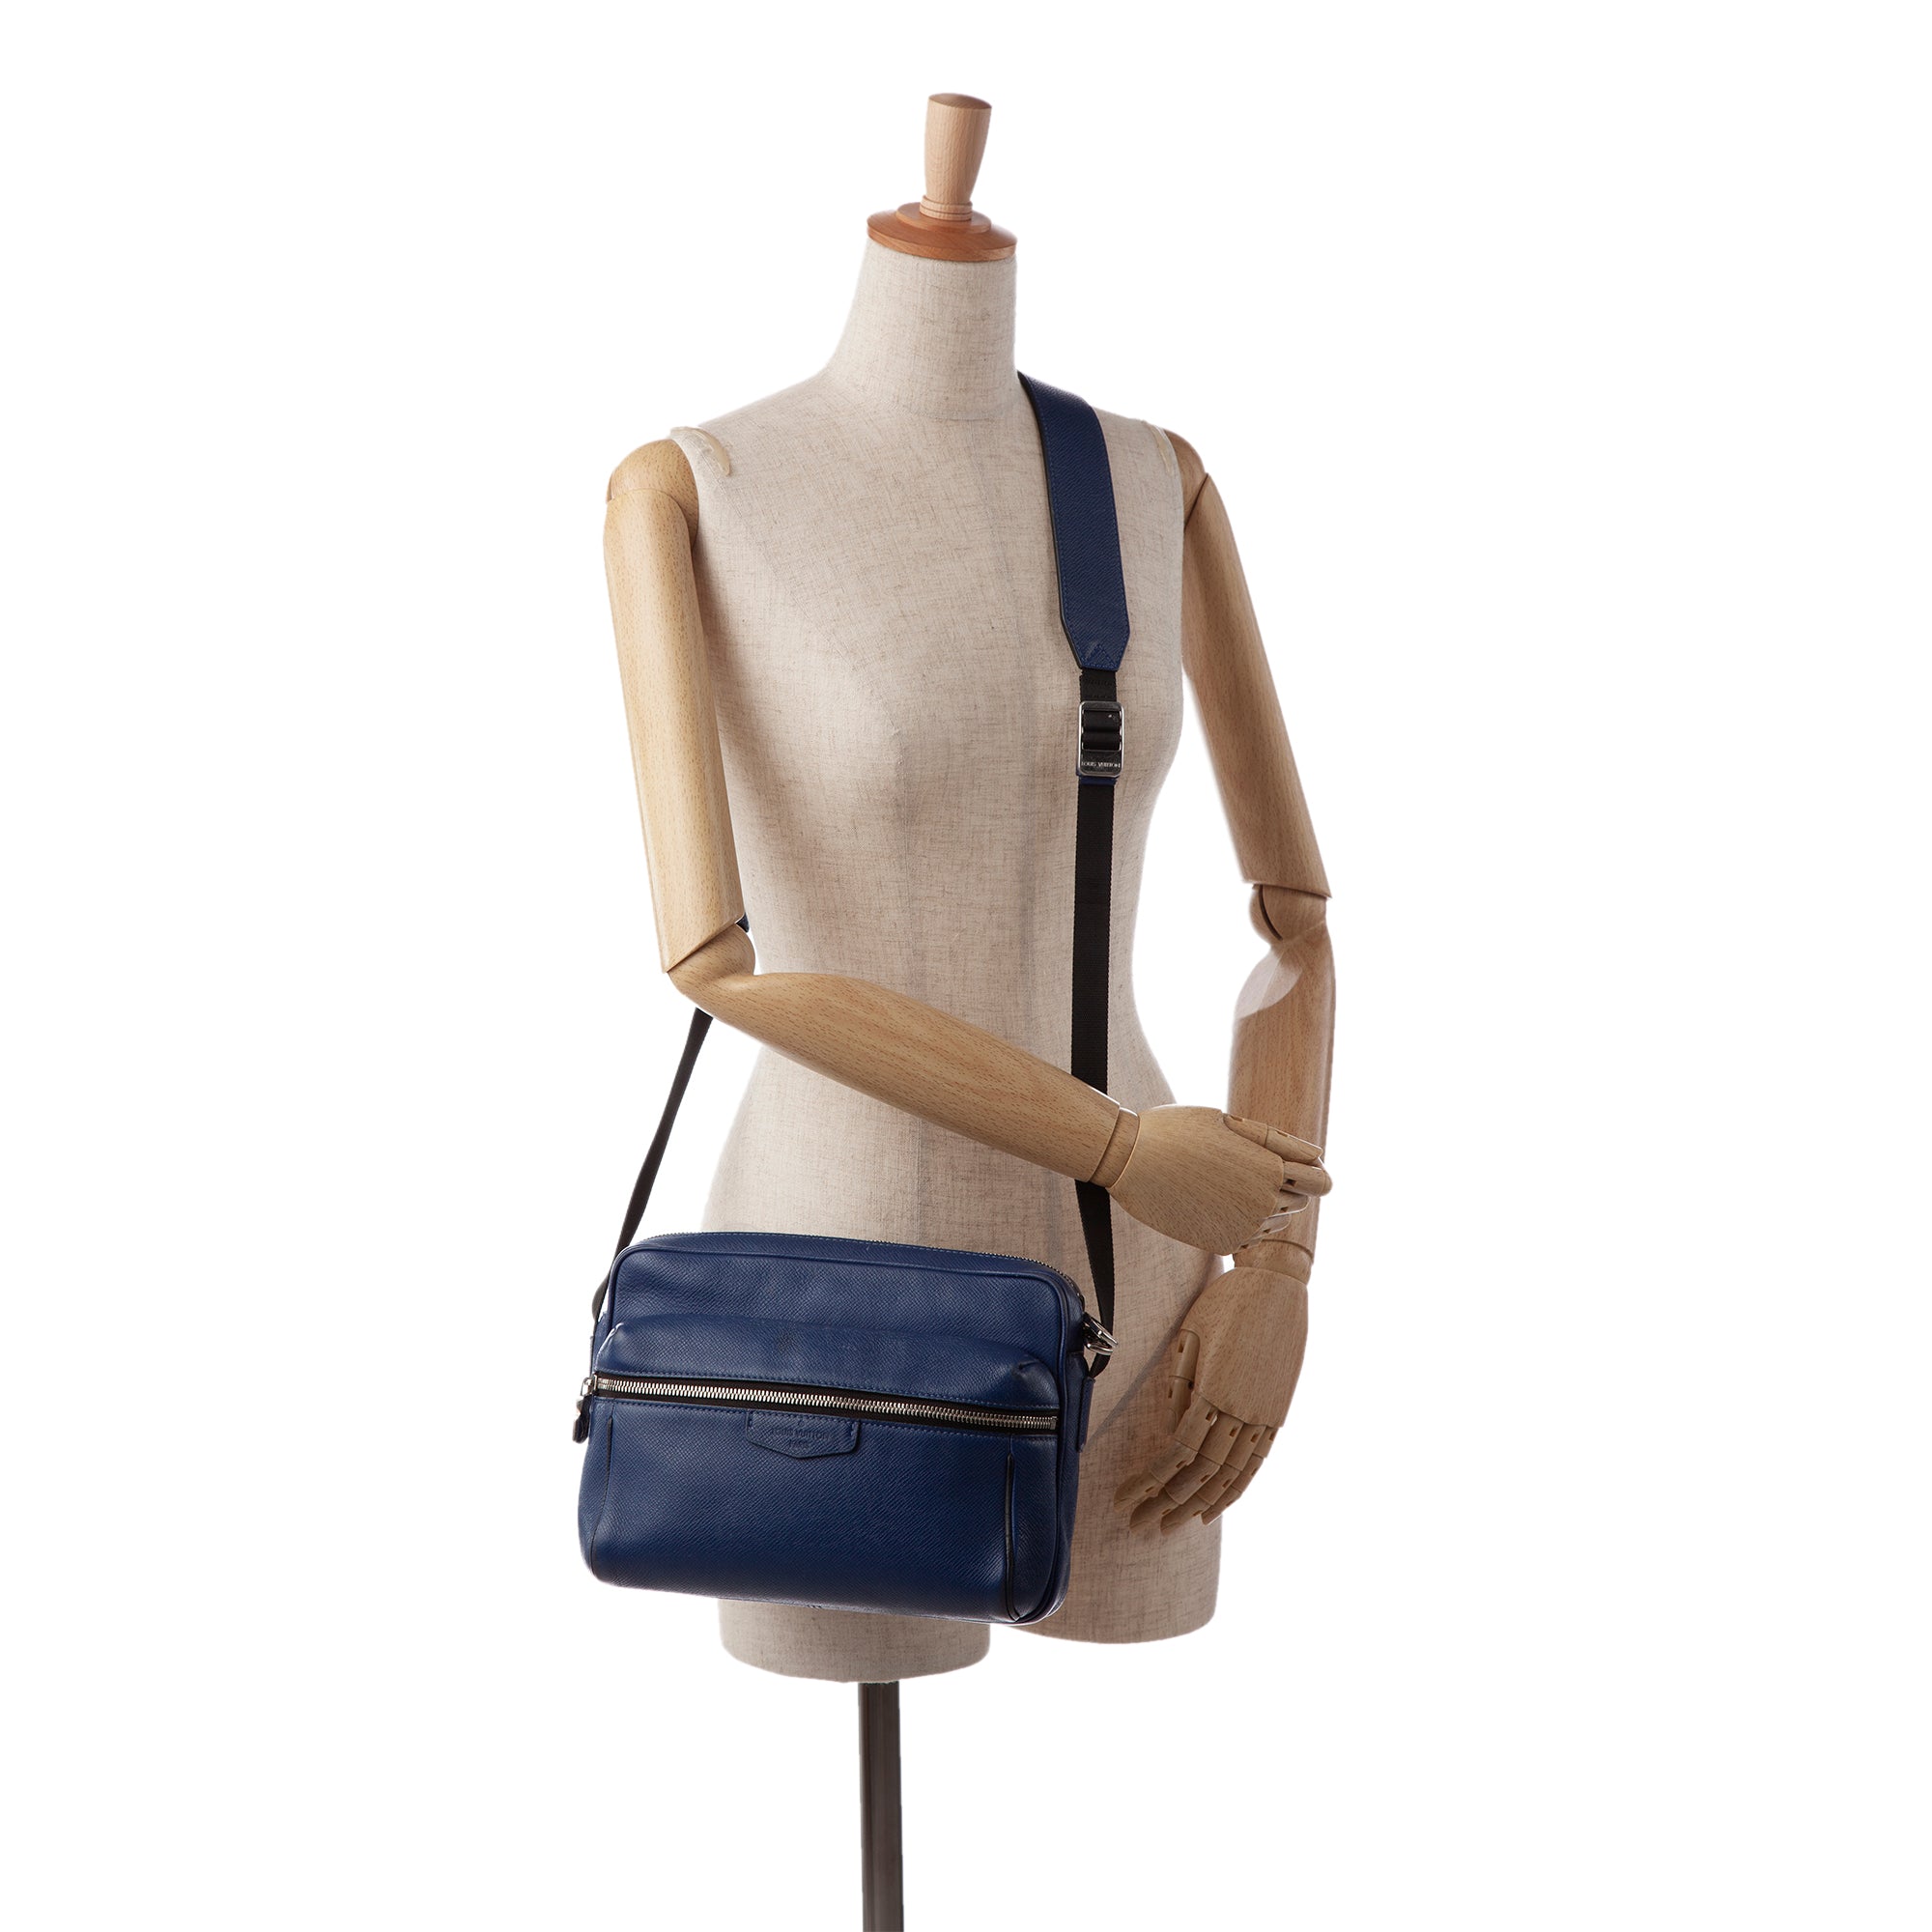 Bluish Louis Vuitton Taiga Outdoor Messenger PM Crossbody Bag